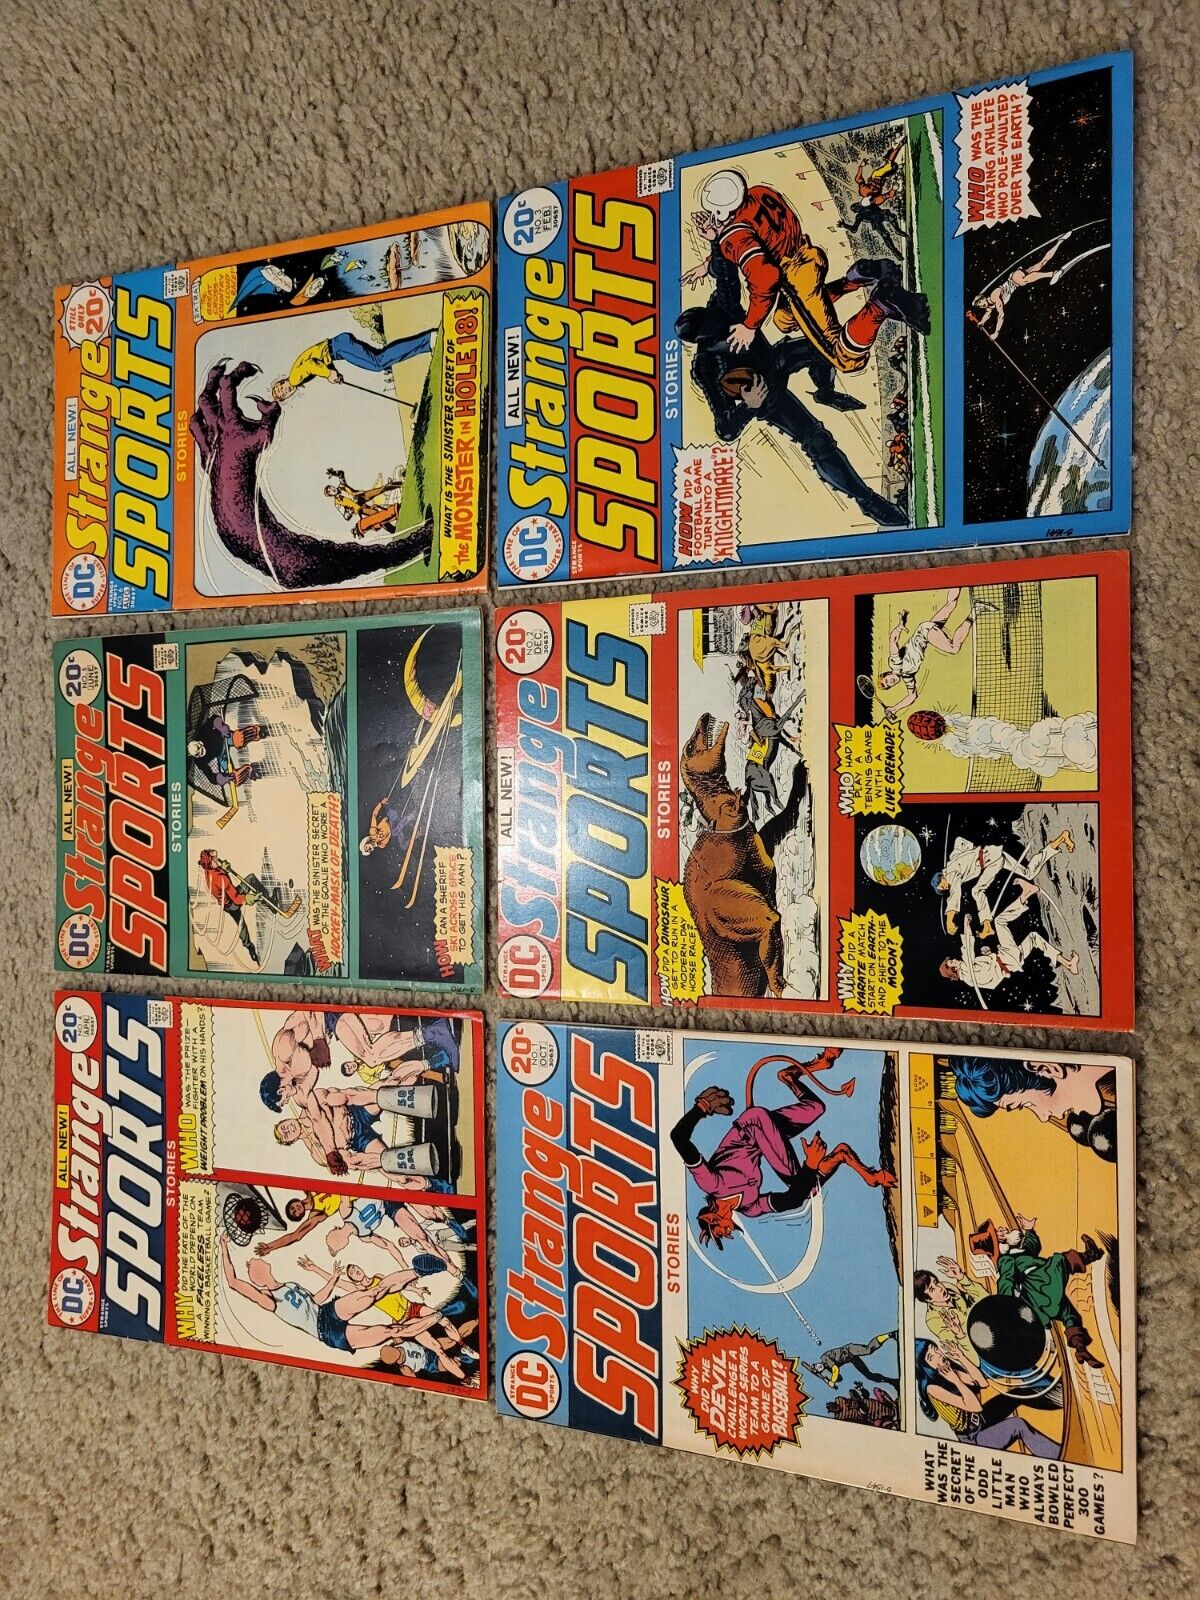 Strange Sports Stories 1-6 DC Comics lot COMPLETE SET 1973-1974 HIGH GRADE